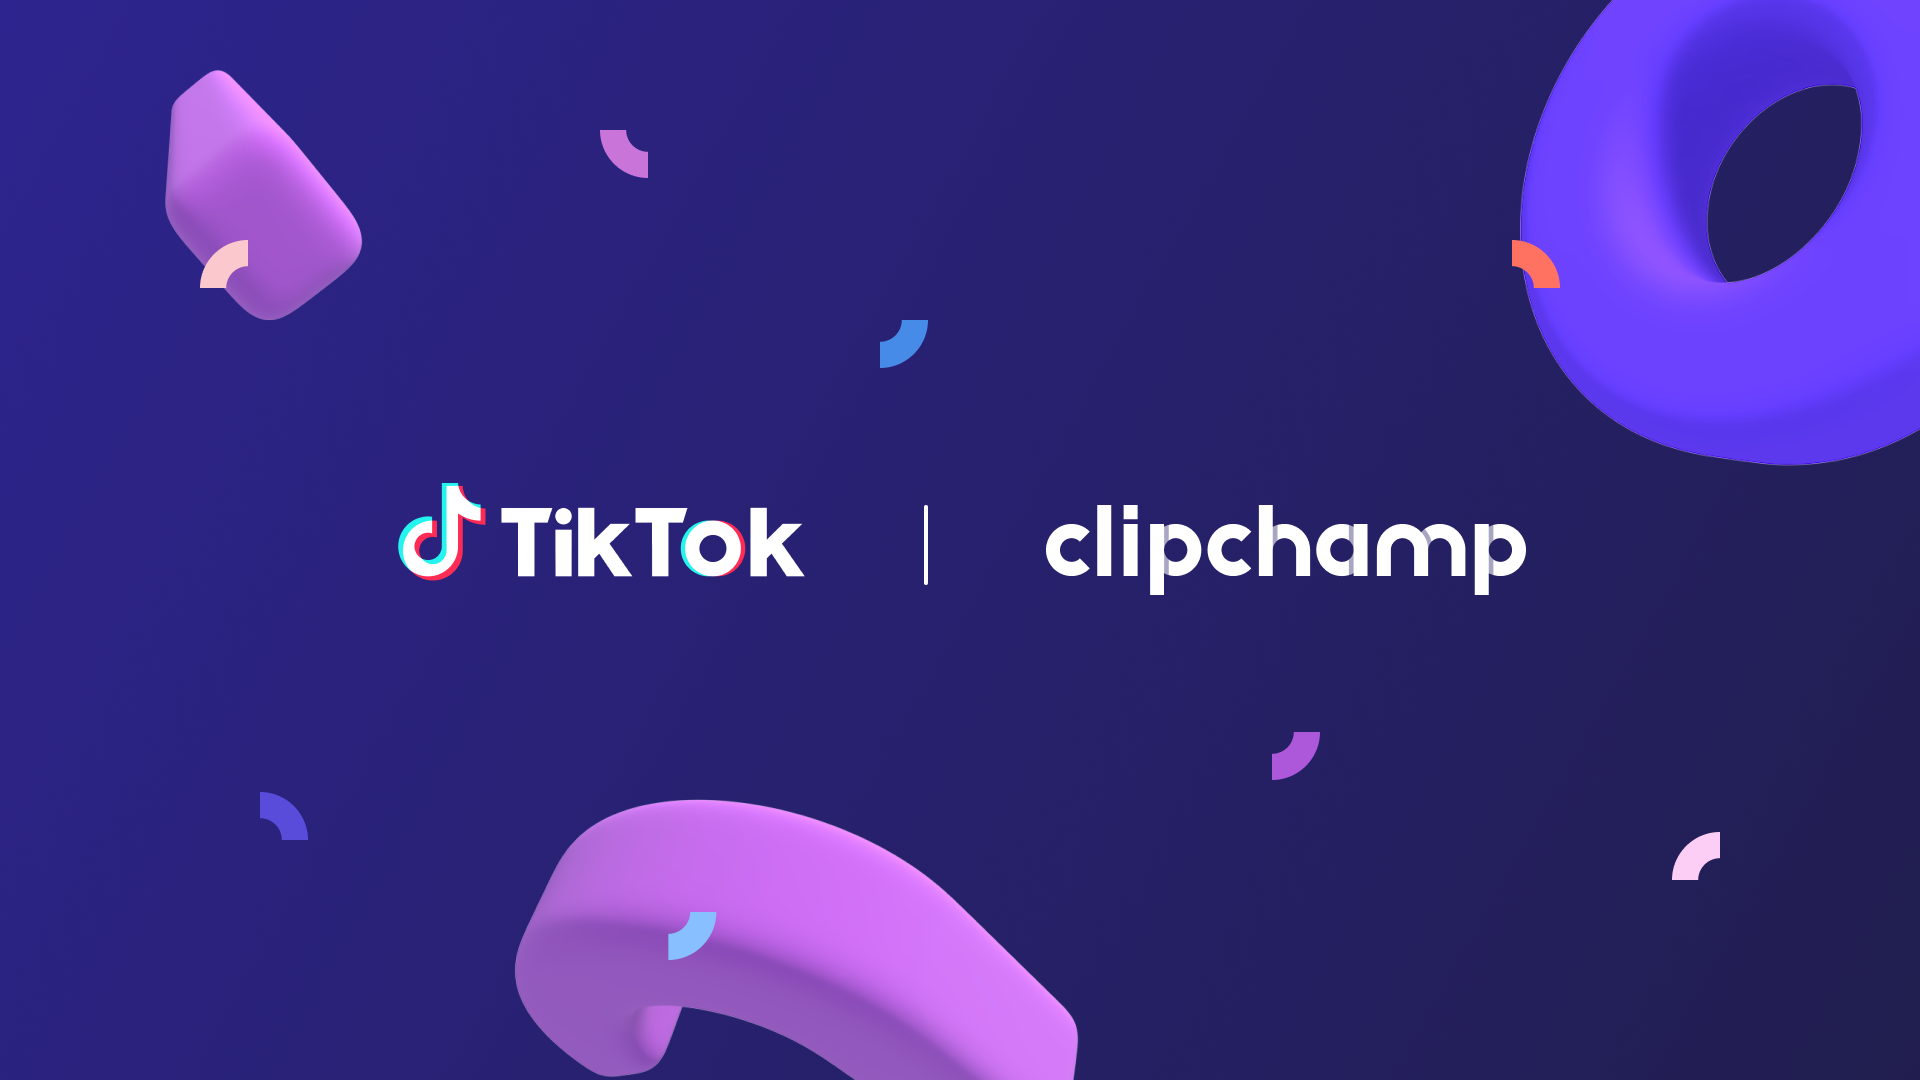 TikTok and Clipchamp logos.